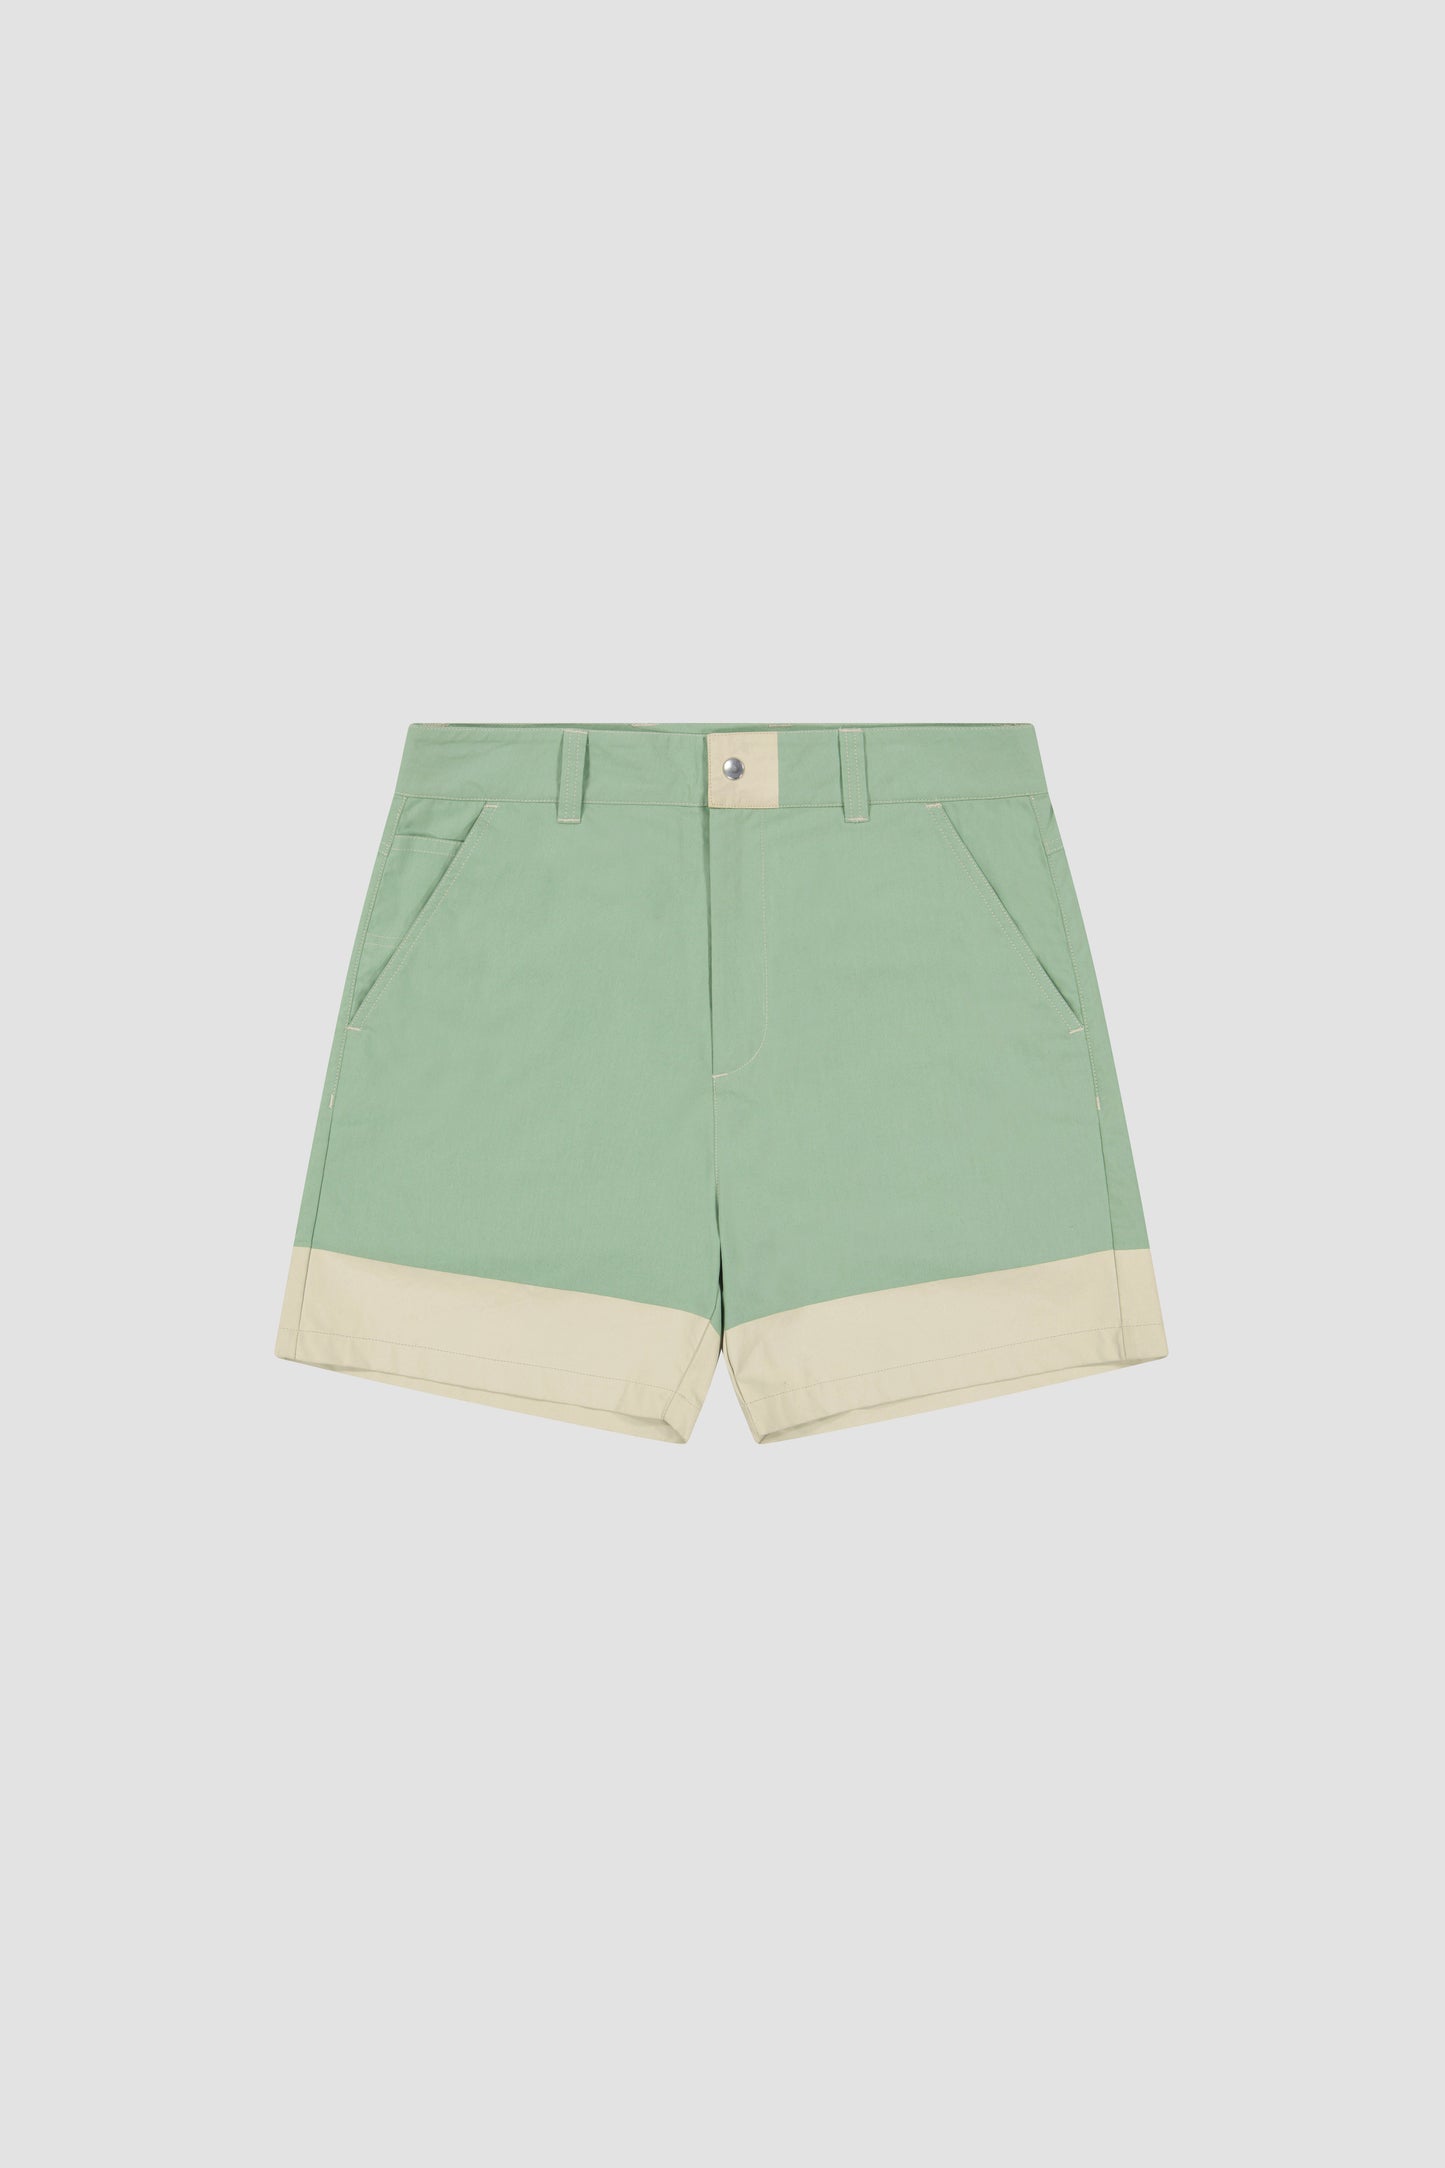 River bed shorts